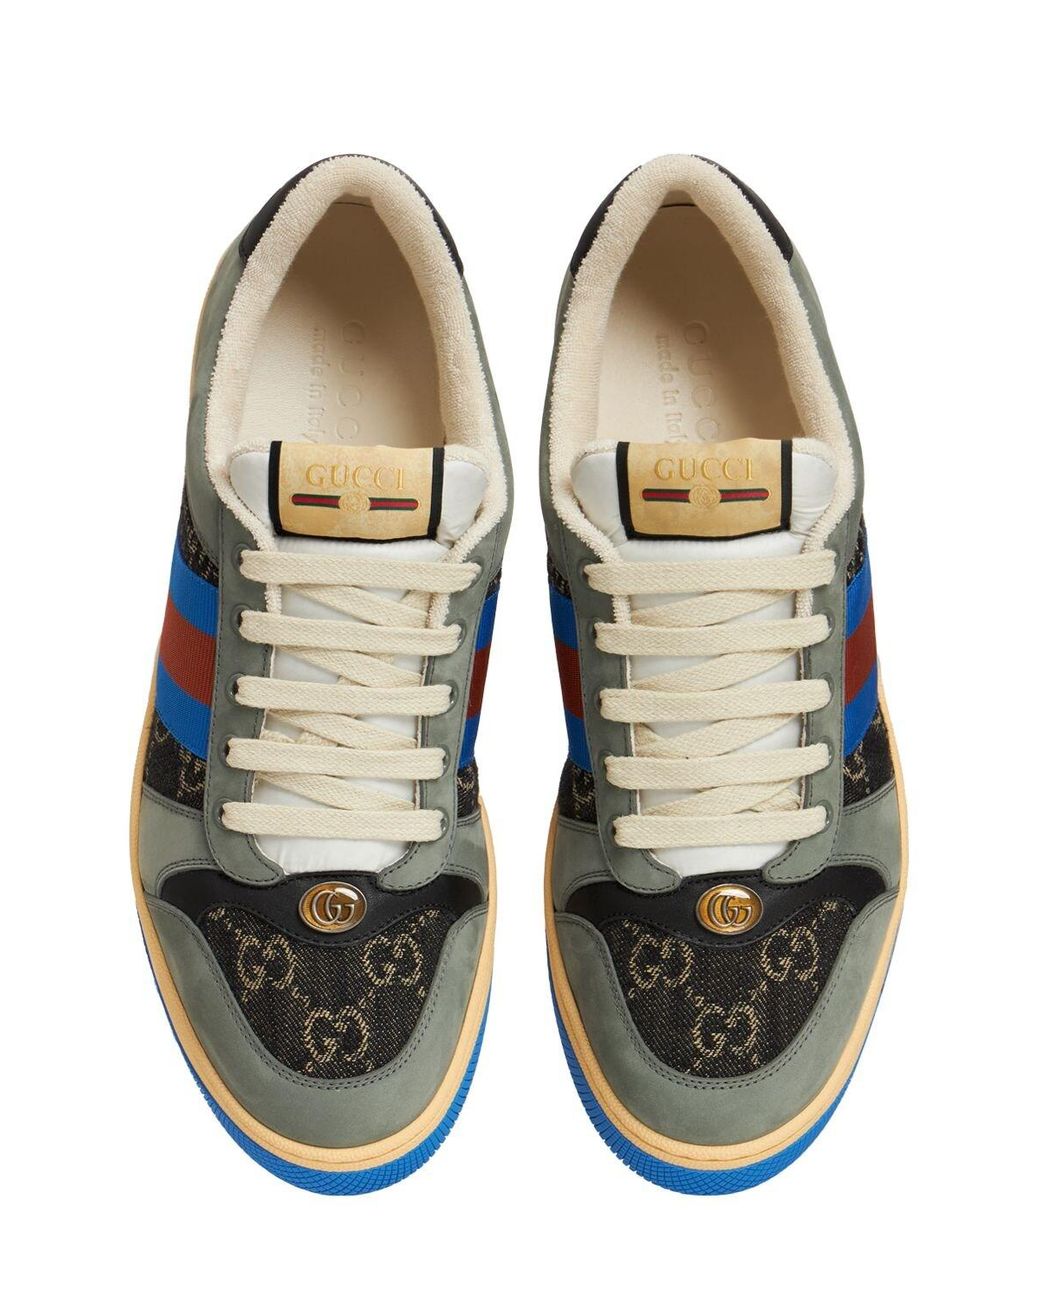 Gucci Screener Gg Denim & Leather Sneakers in Grey/Blue (Blue 